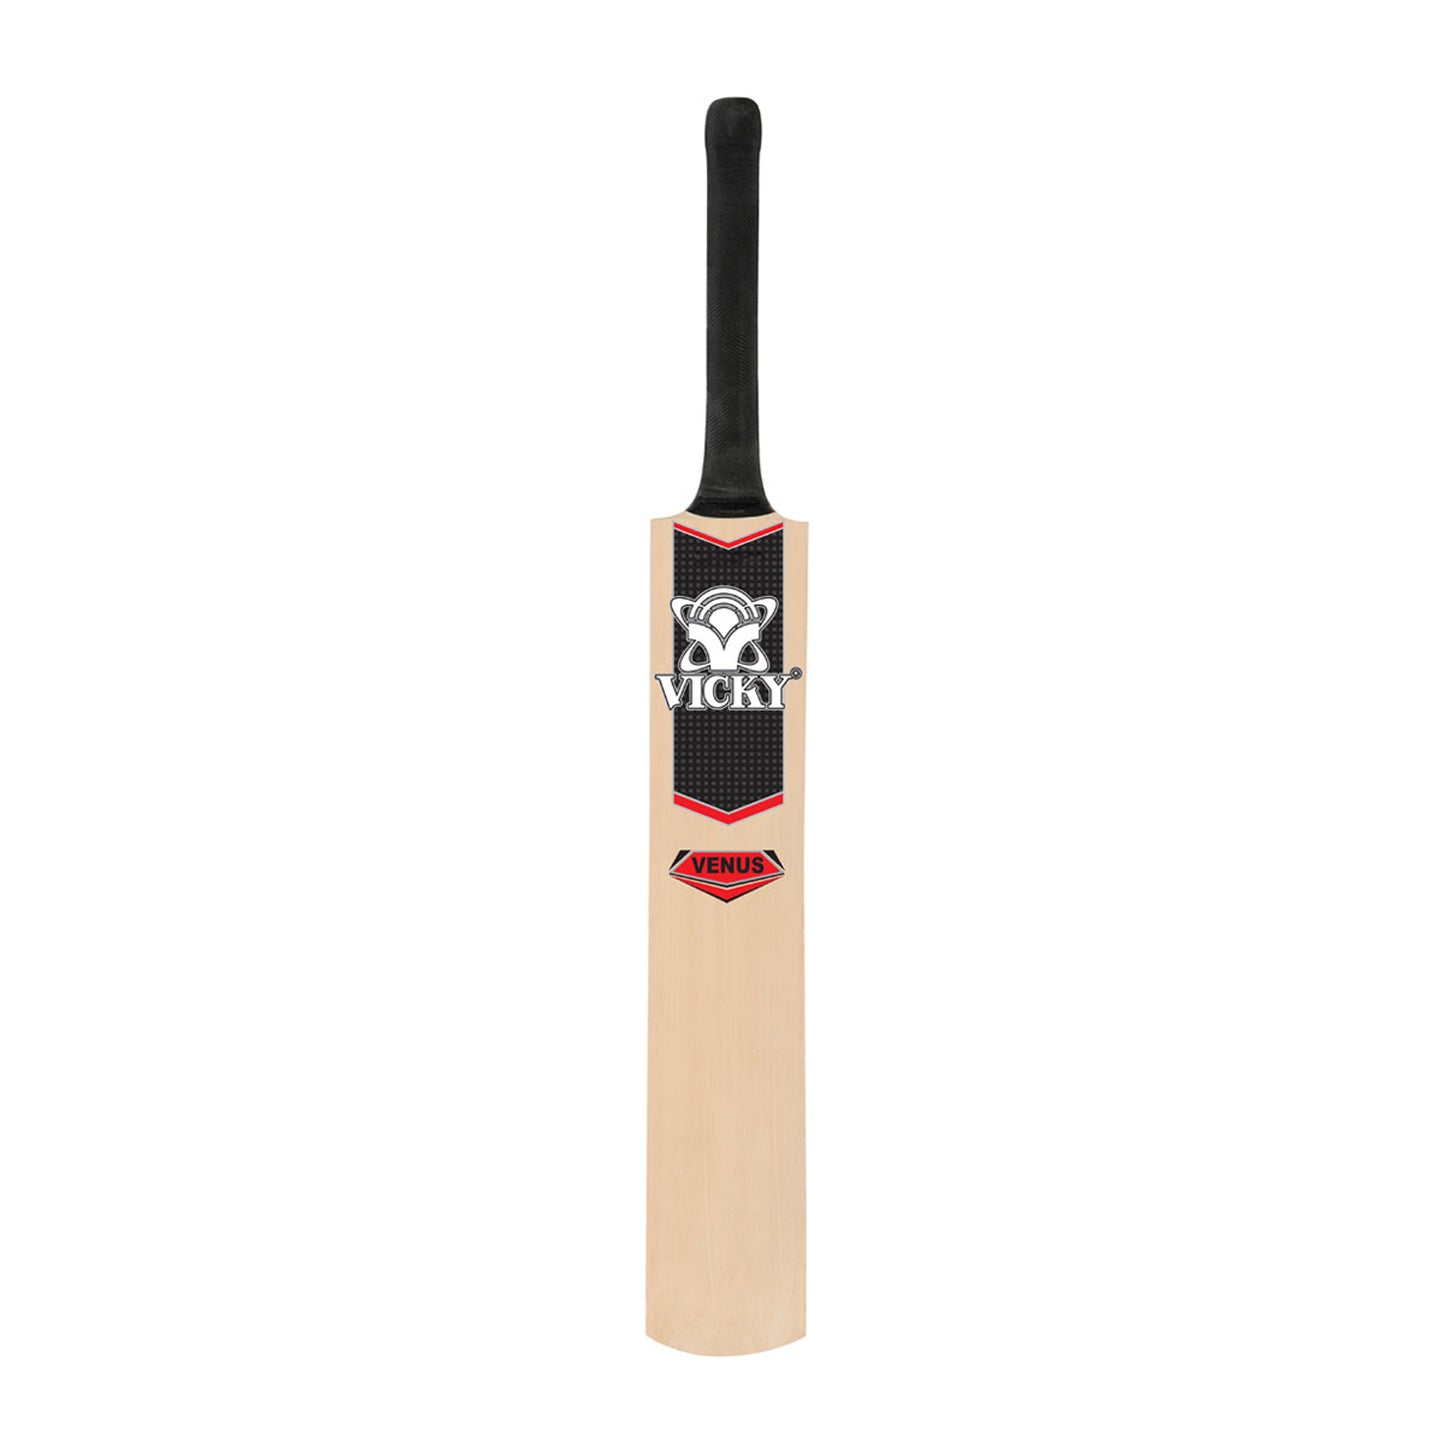 Vicky Venus Cricket Bat (For Light & Heavy Tennis Ball) - Best Price online Prokicksports.com